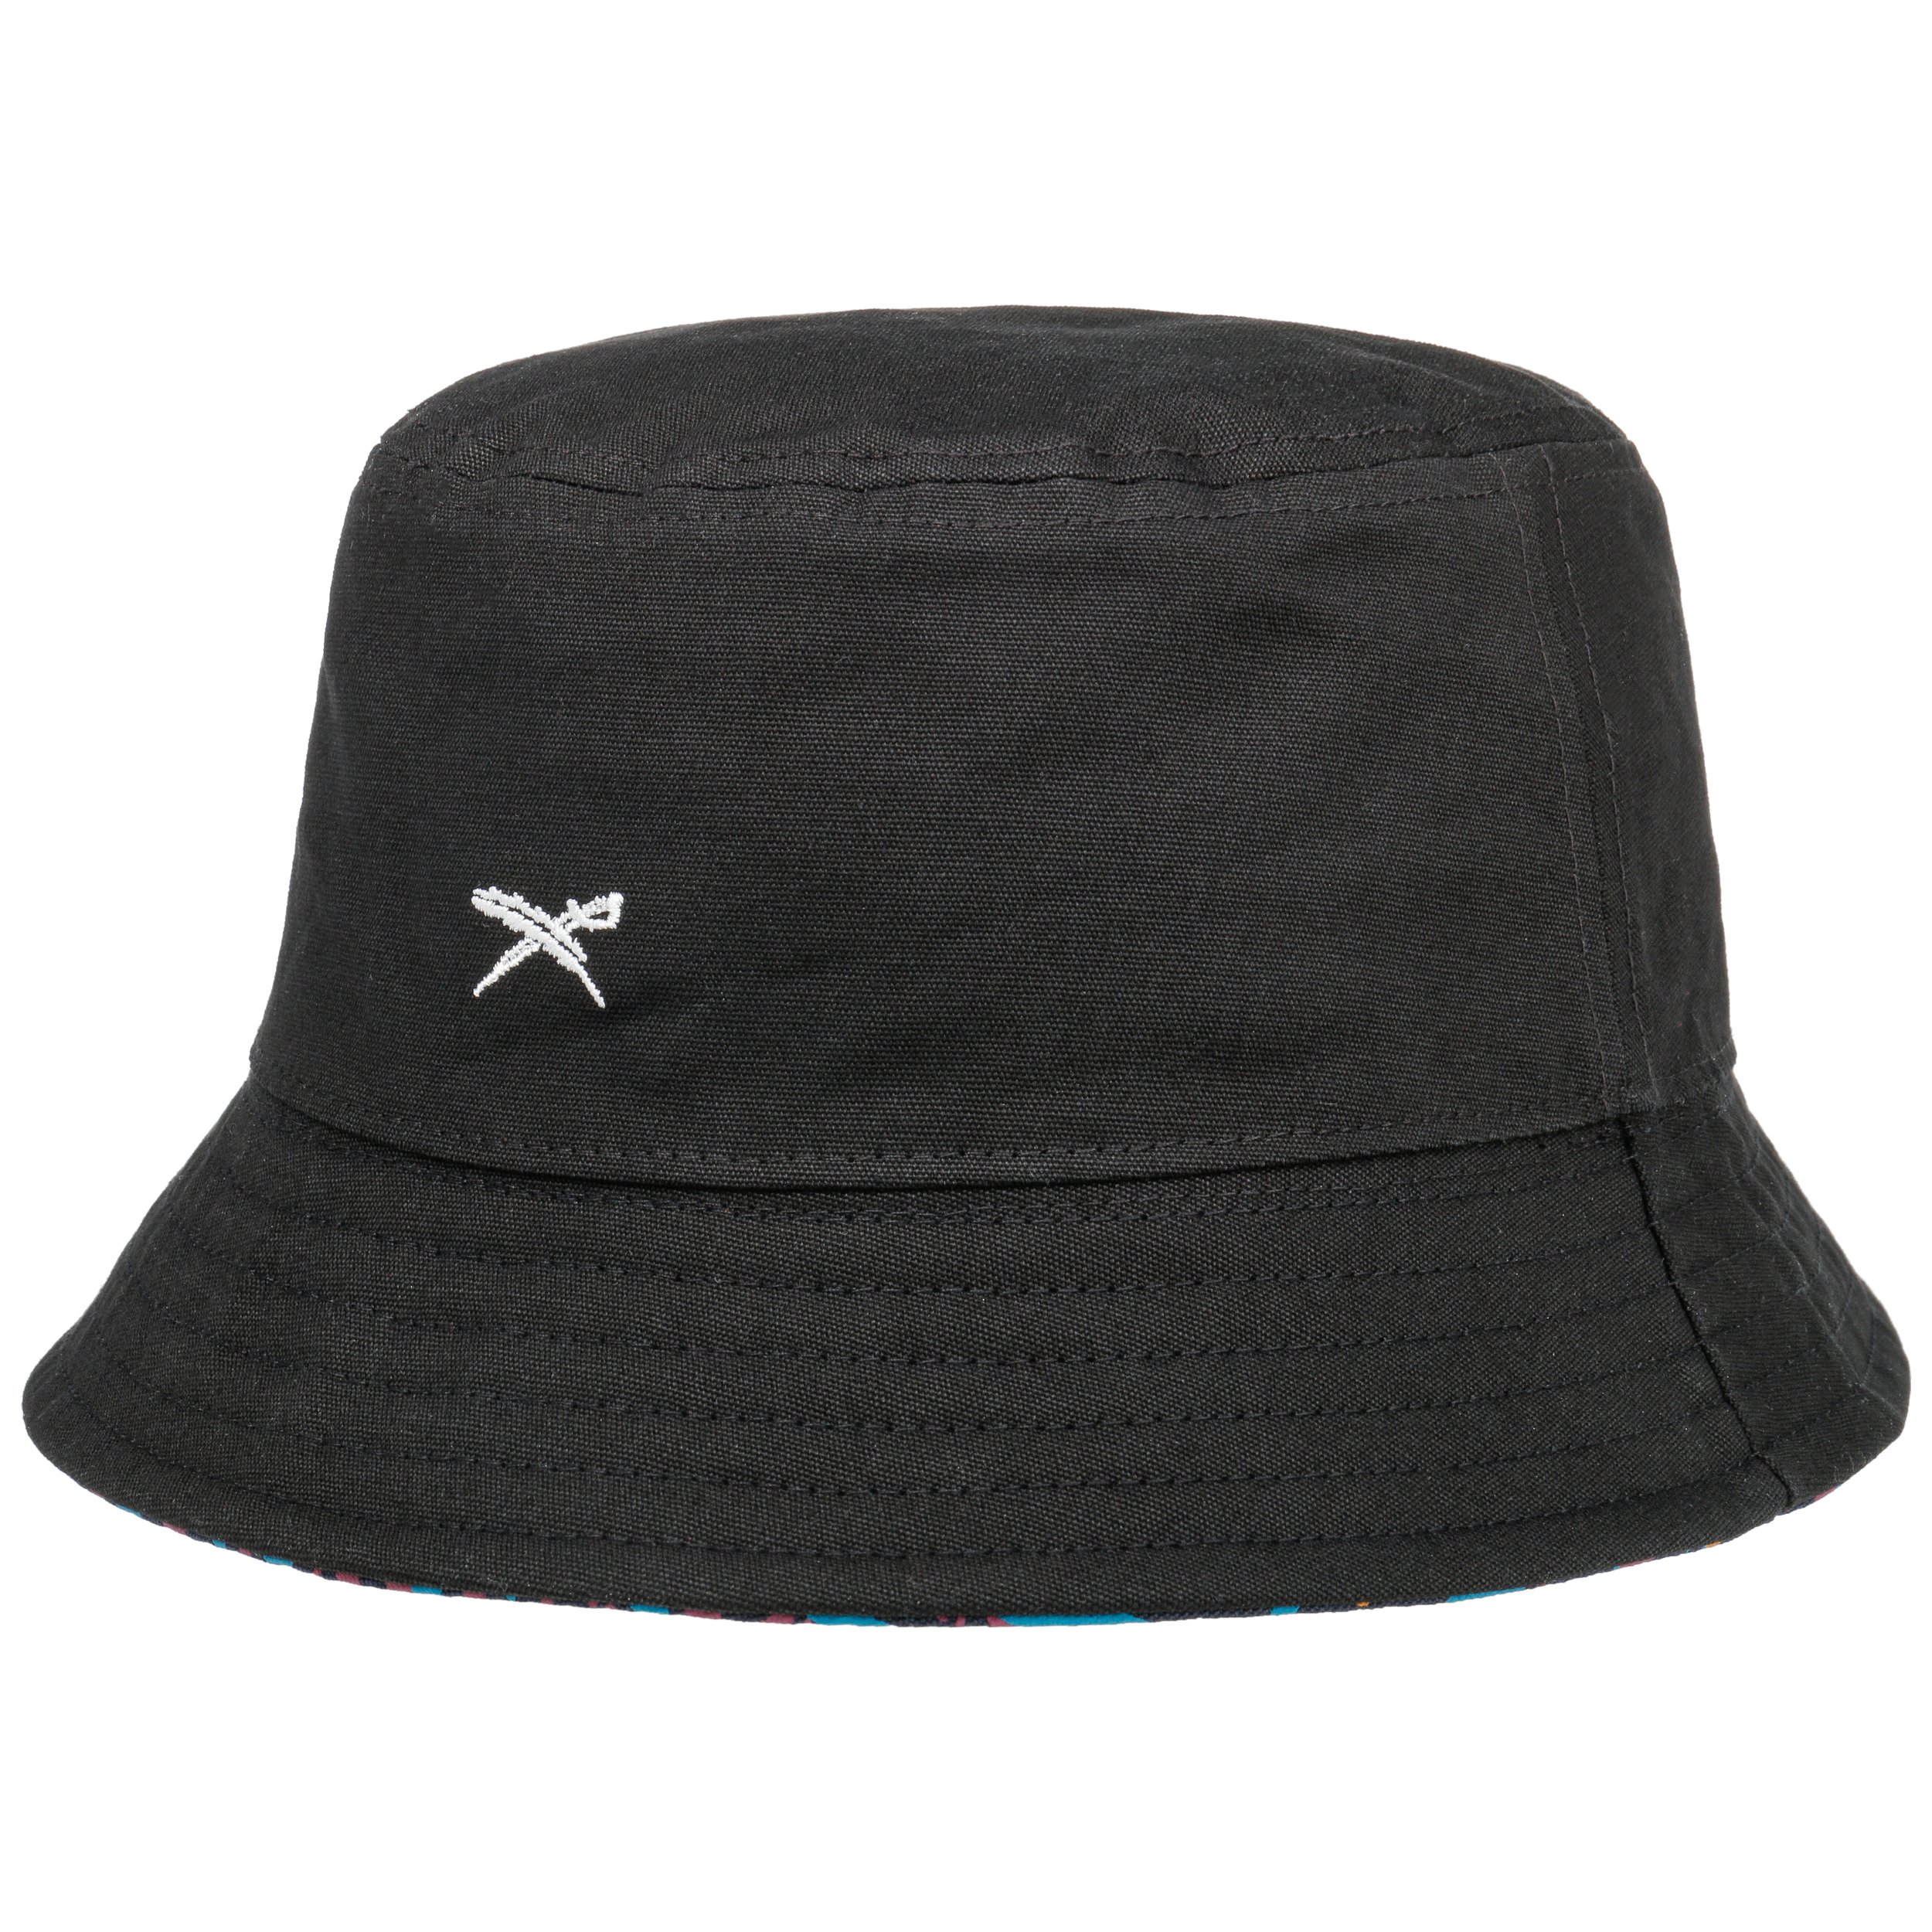 Resort Bucket Reversible Hat by iriedaily - 44,95